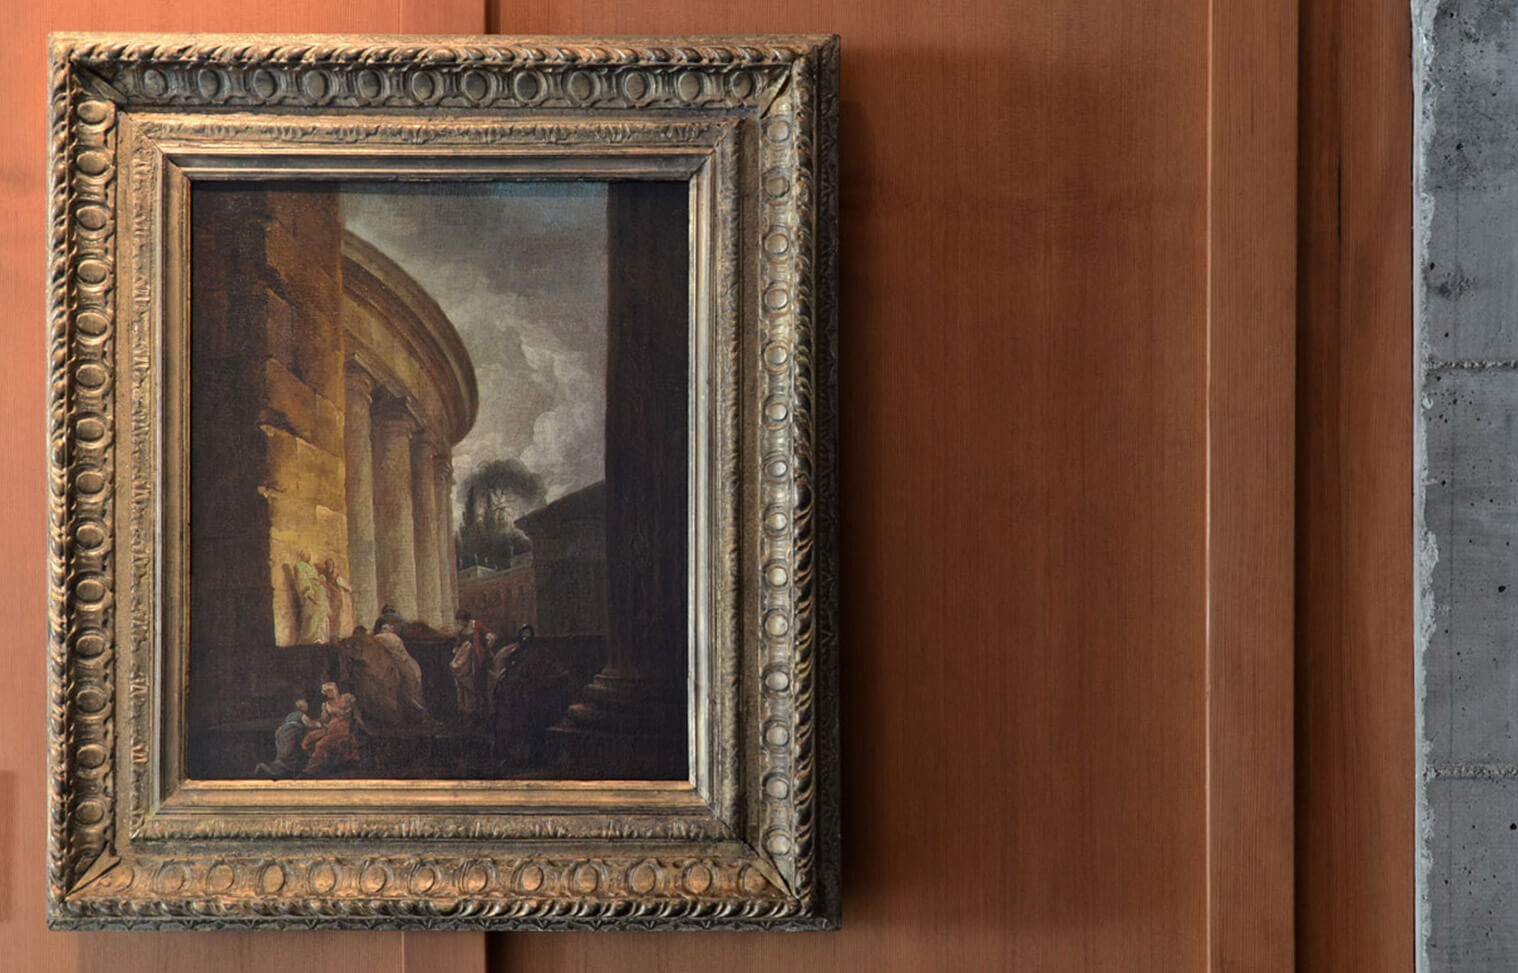 This 18th century capriccio by Hubert Robert hangs in Piraneseum's Painting Gallery.